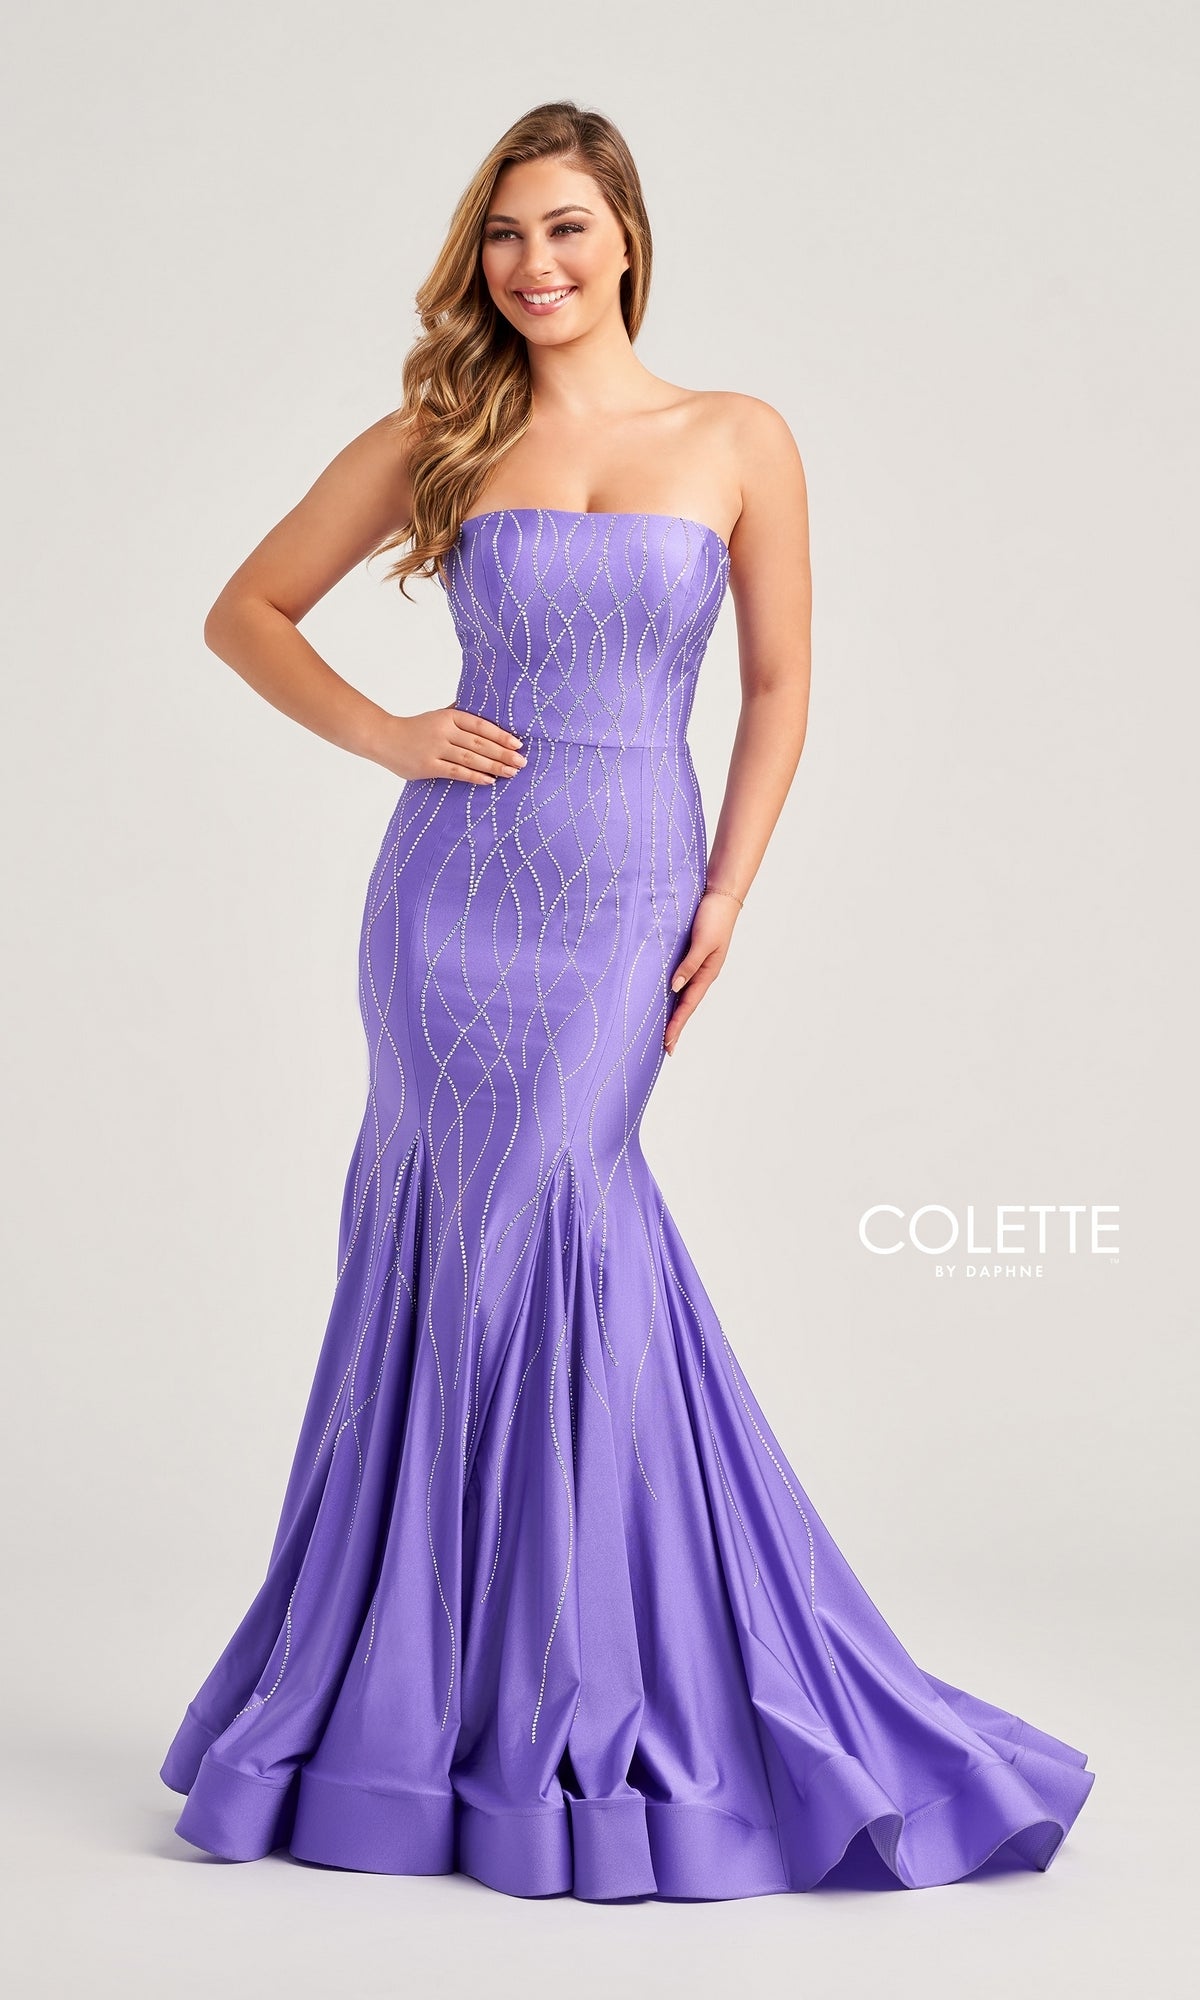 Colette Strapless Long Glitter Prom Dress CL5106